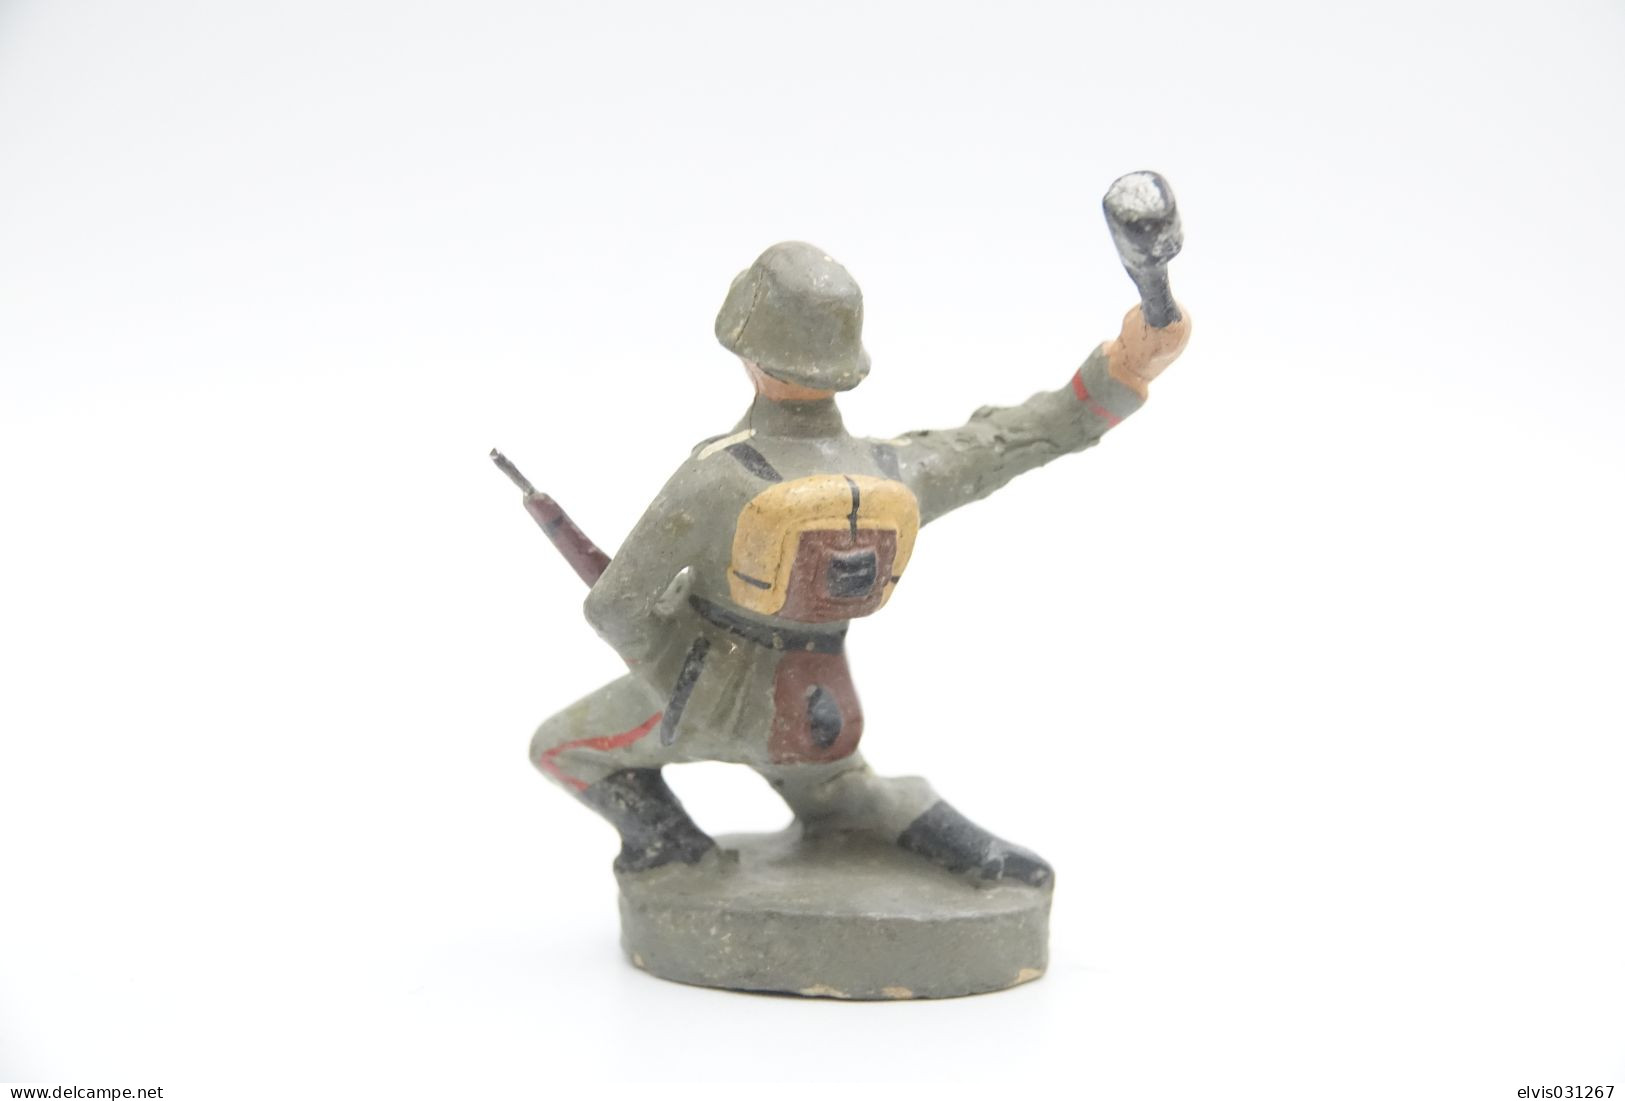 Lineol ? Germany, German With Grenade, Vintage Toy Soldier, Prewar - 1930's, Elastolin, Lineol Hauser, Durolin - Figuren